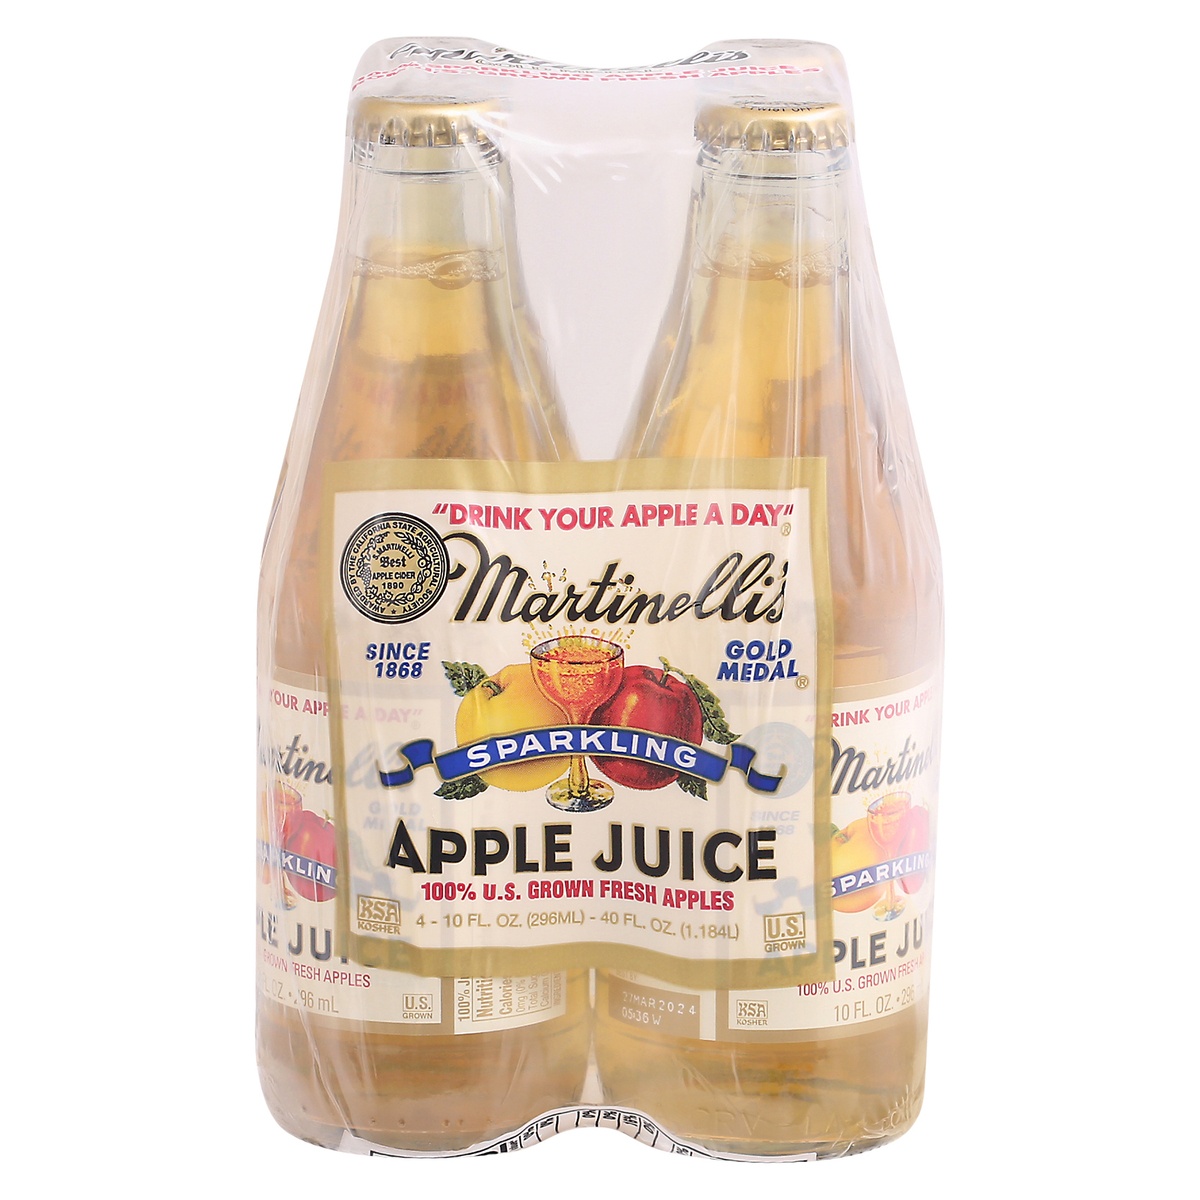 Apple Juice 10 fl. oz. Glass Bottle - Martinelli's